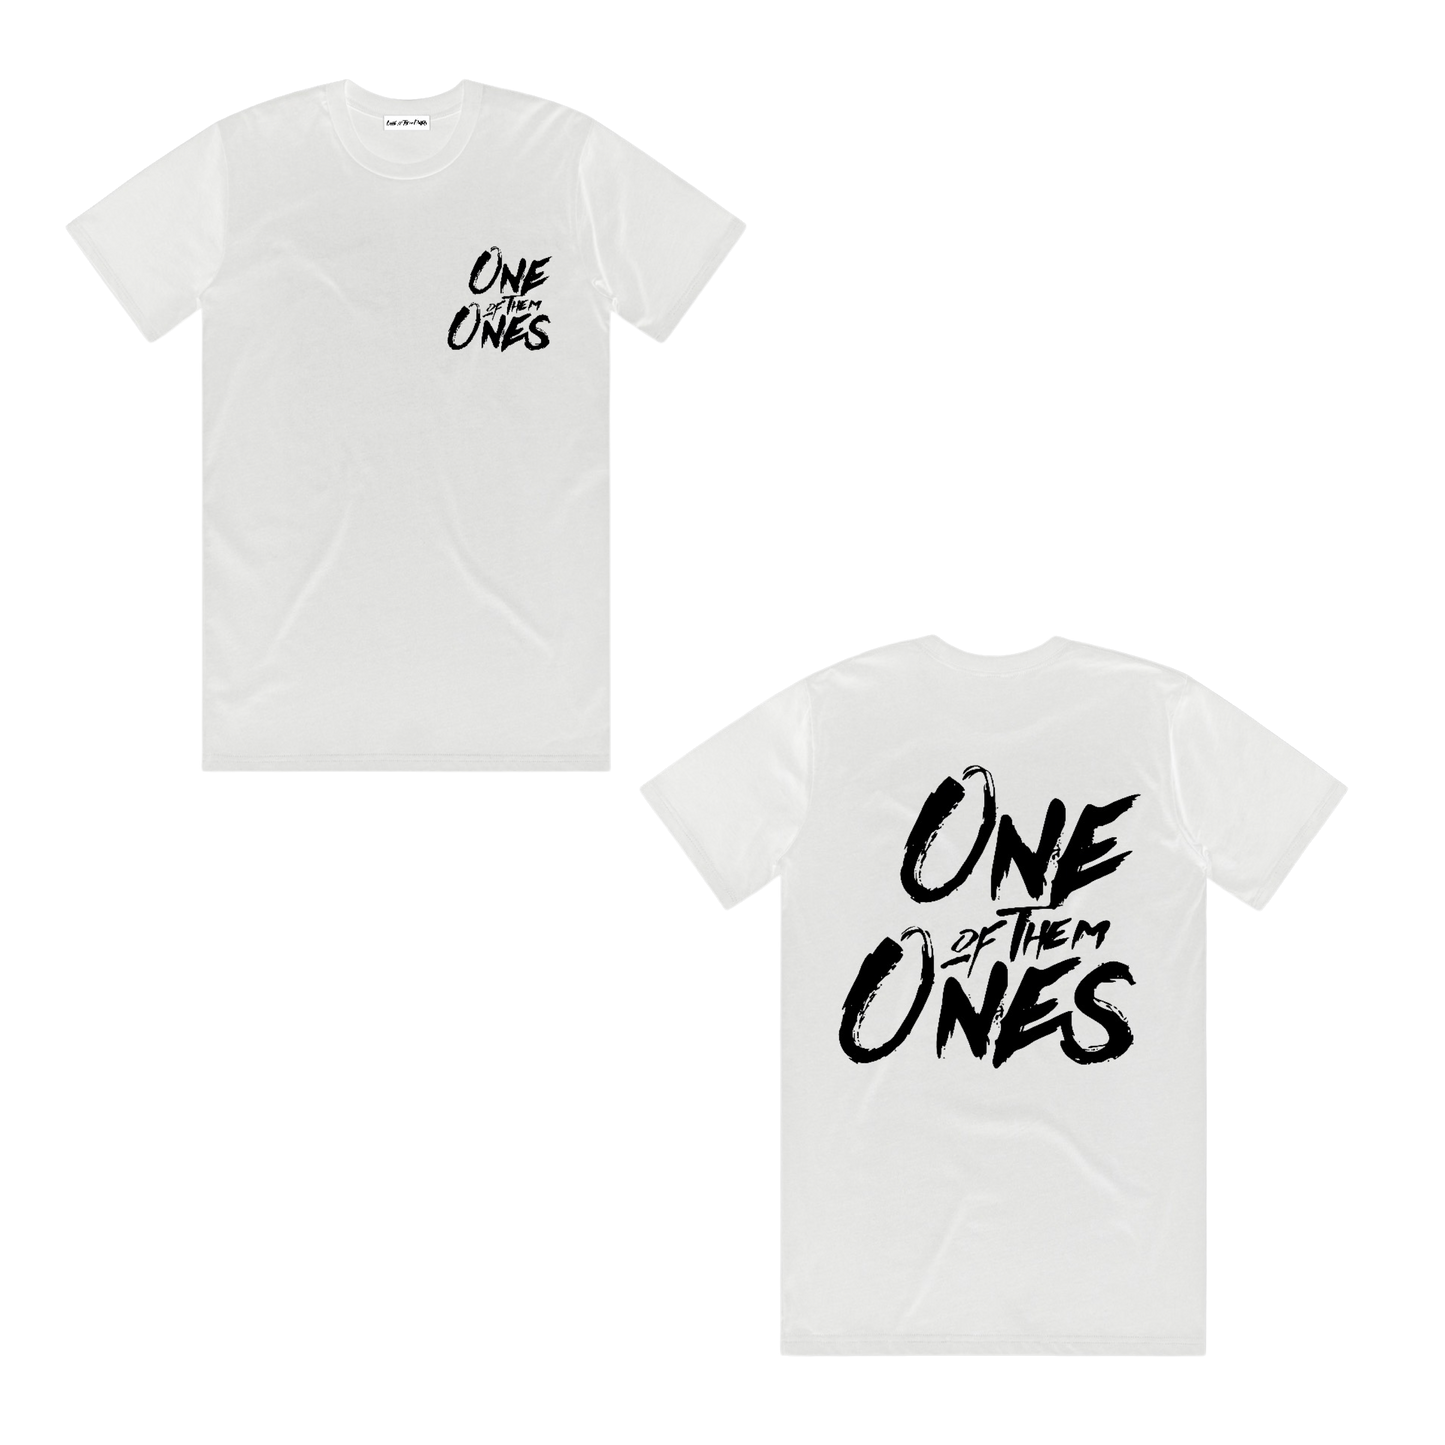 Organik Lyfestyle - 1OfThem1's OG White/Black T-Shirt